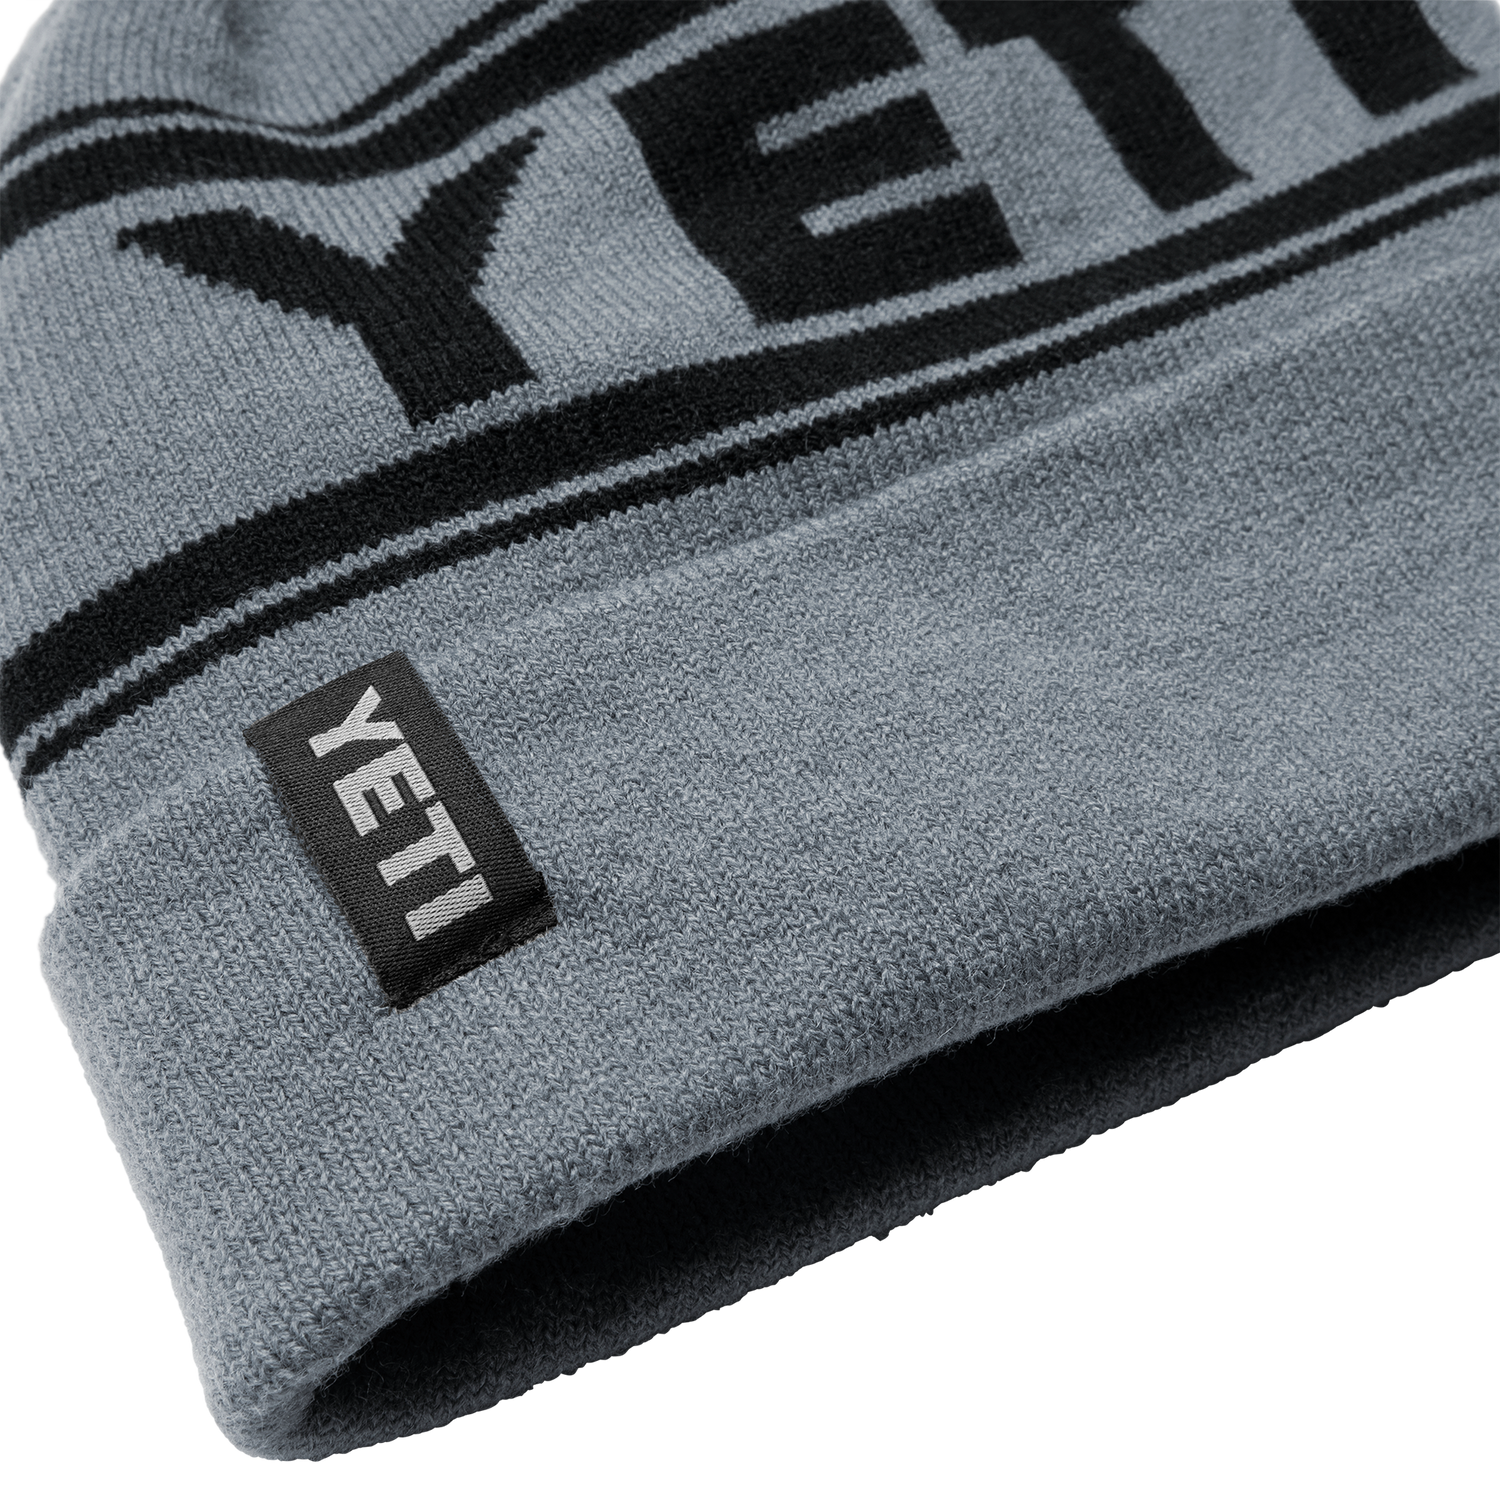 YETI Bonnet Logo Retro Knit Grey/Noir